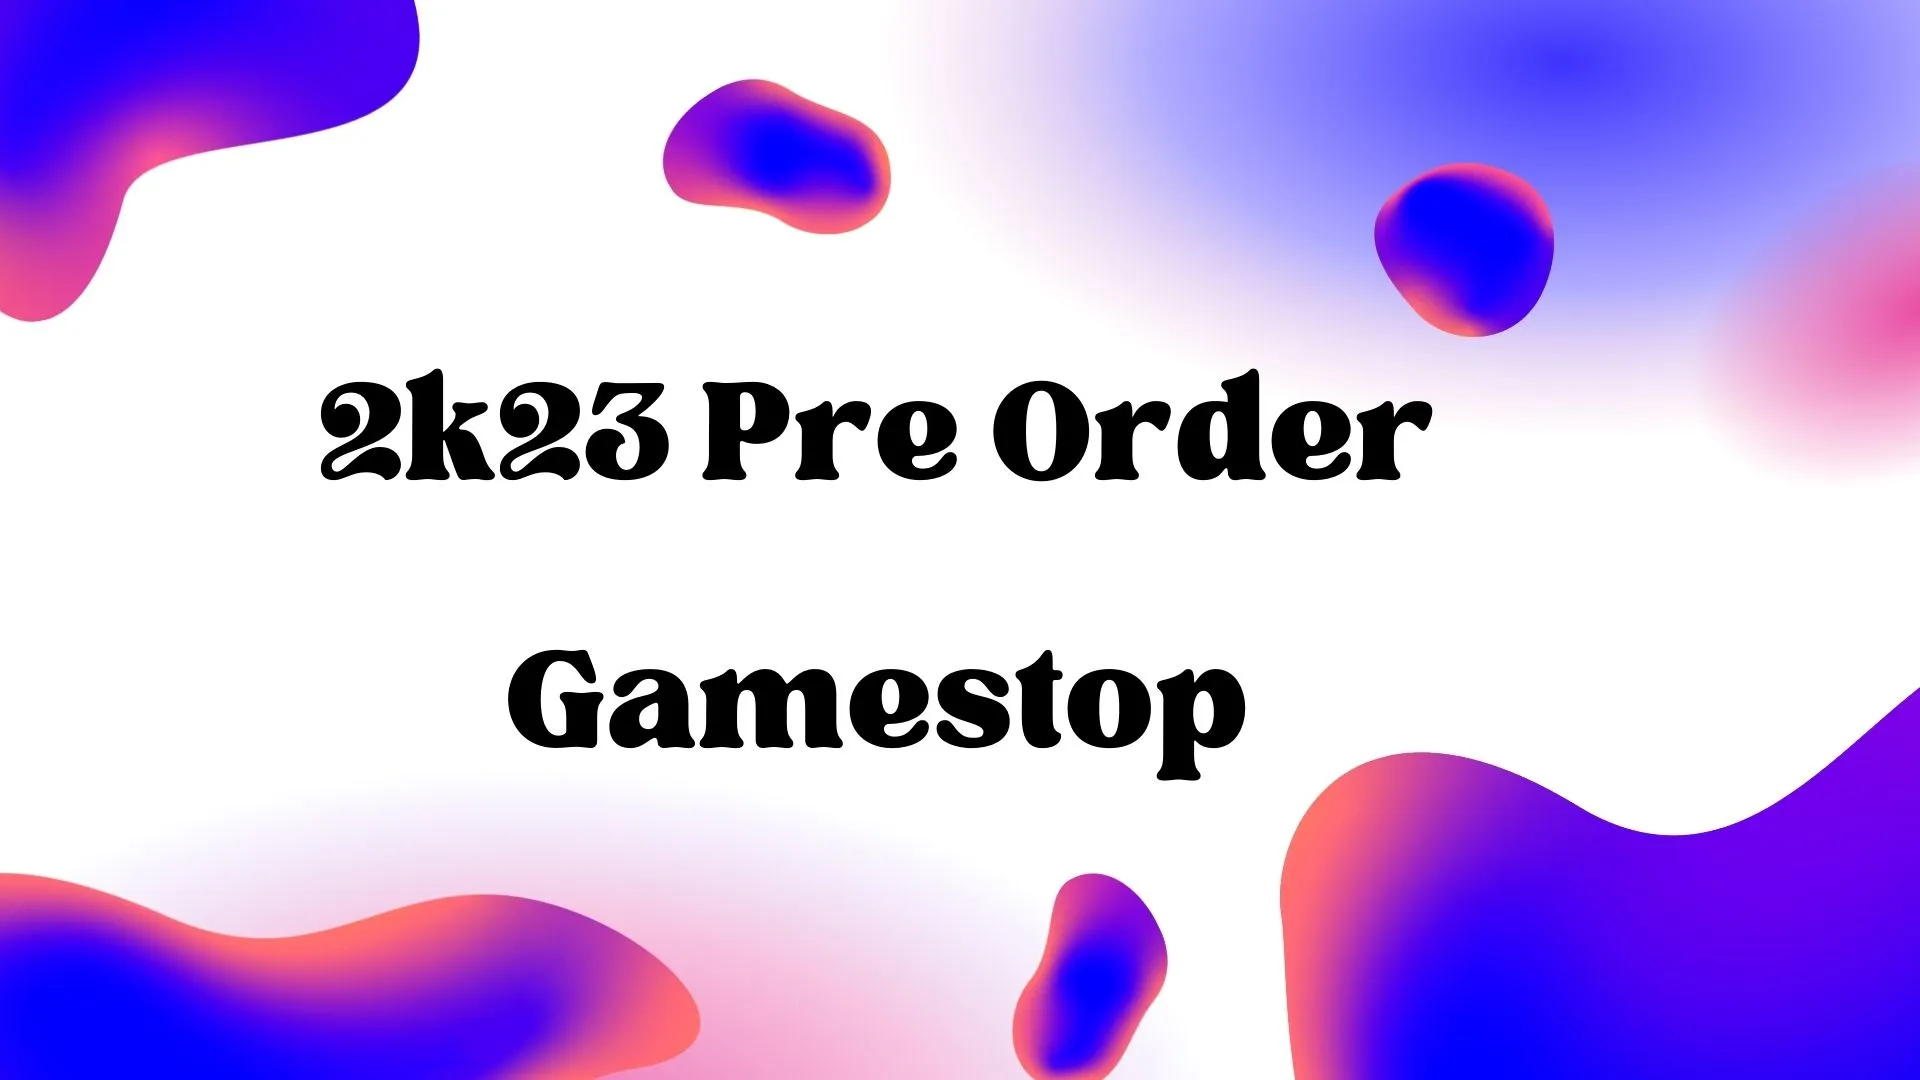 2k23 Pre Order Gamestop